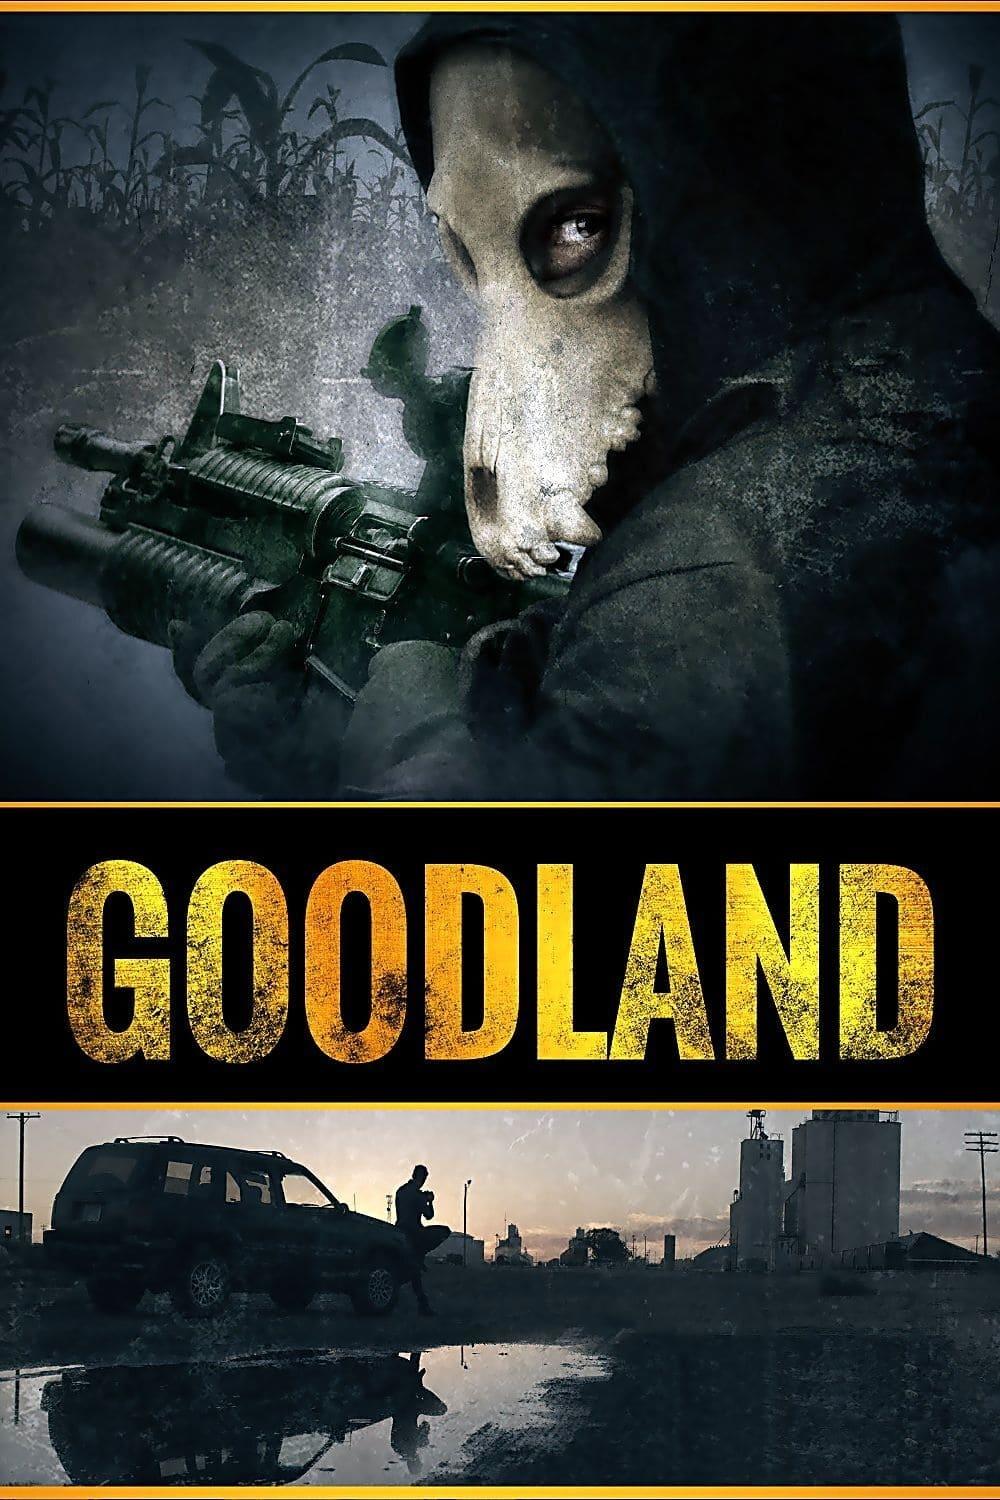 Goodland poster